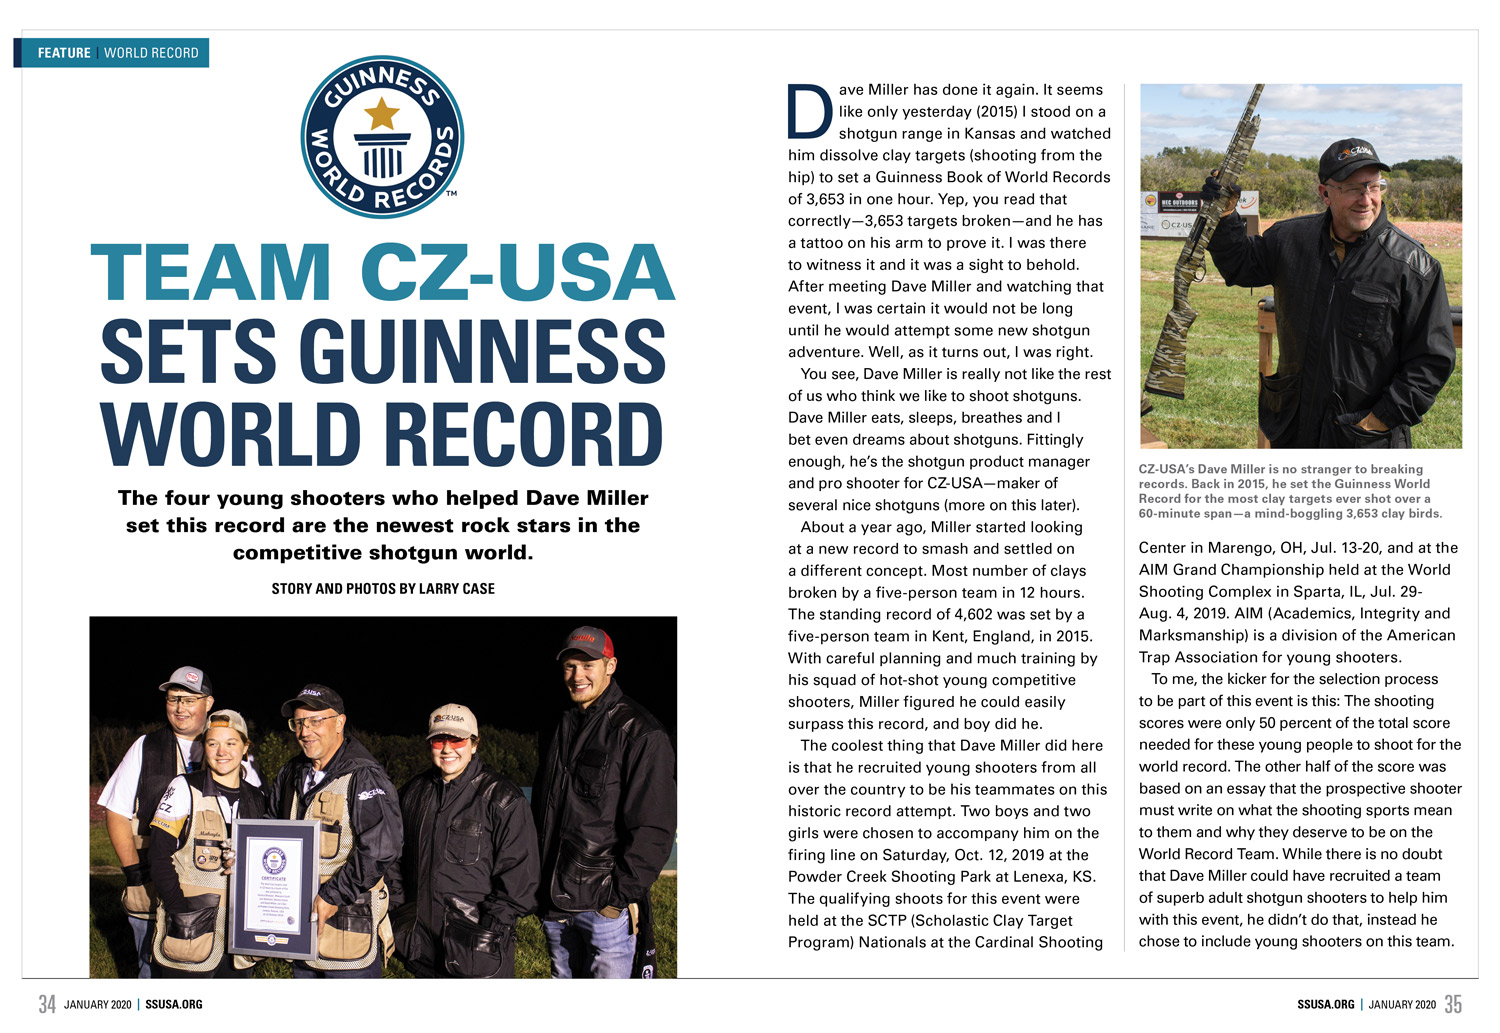 Team CZ-USA sets new Guinness World Record